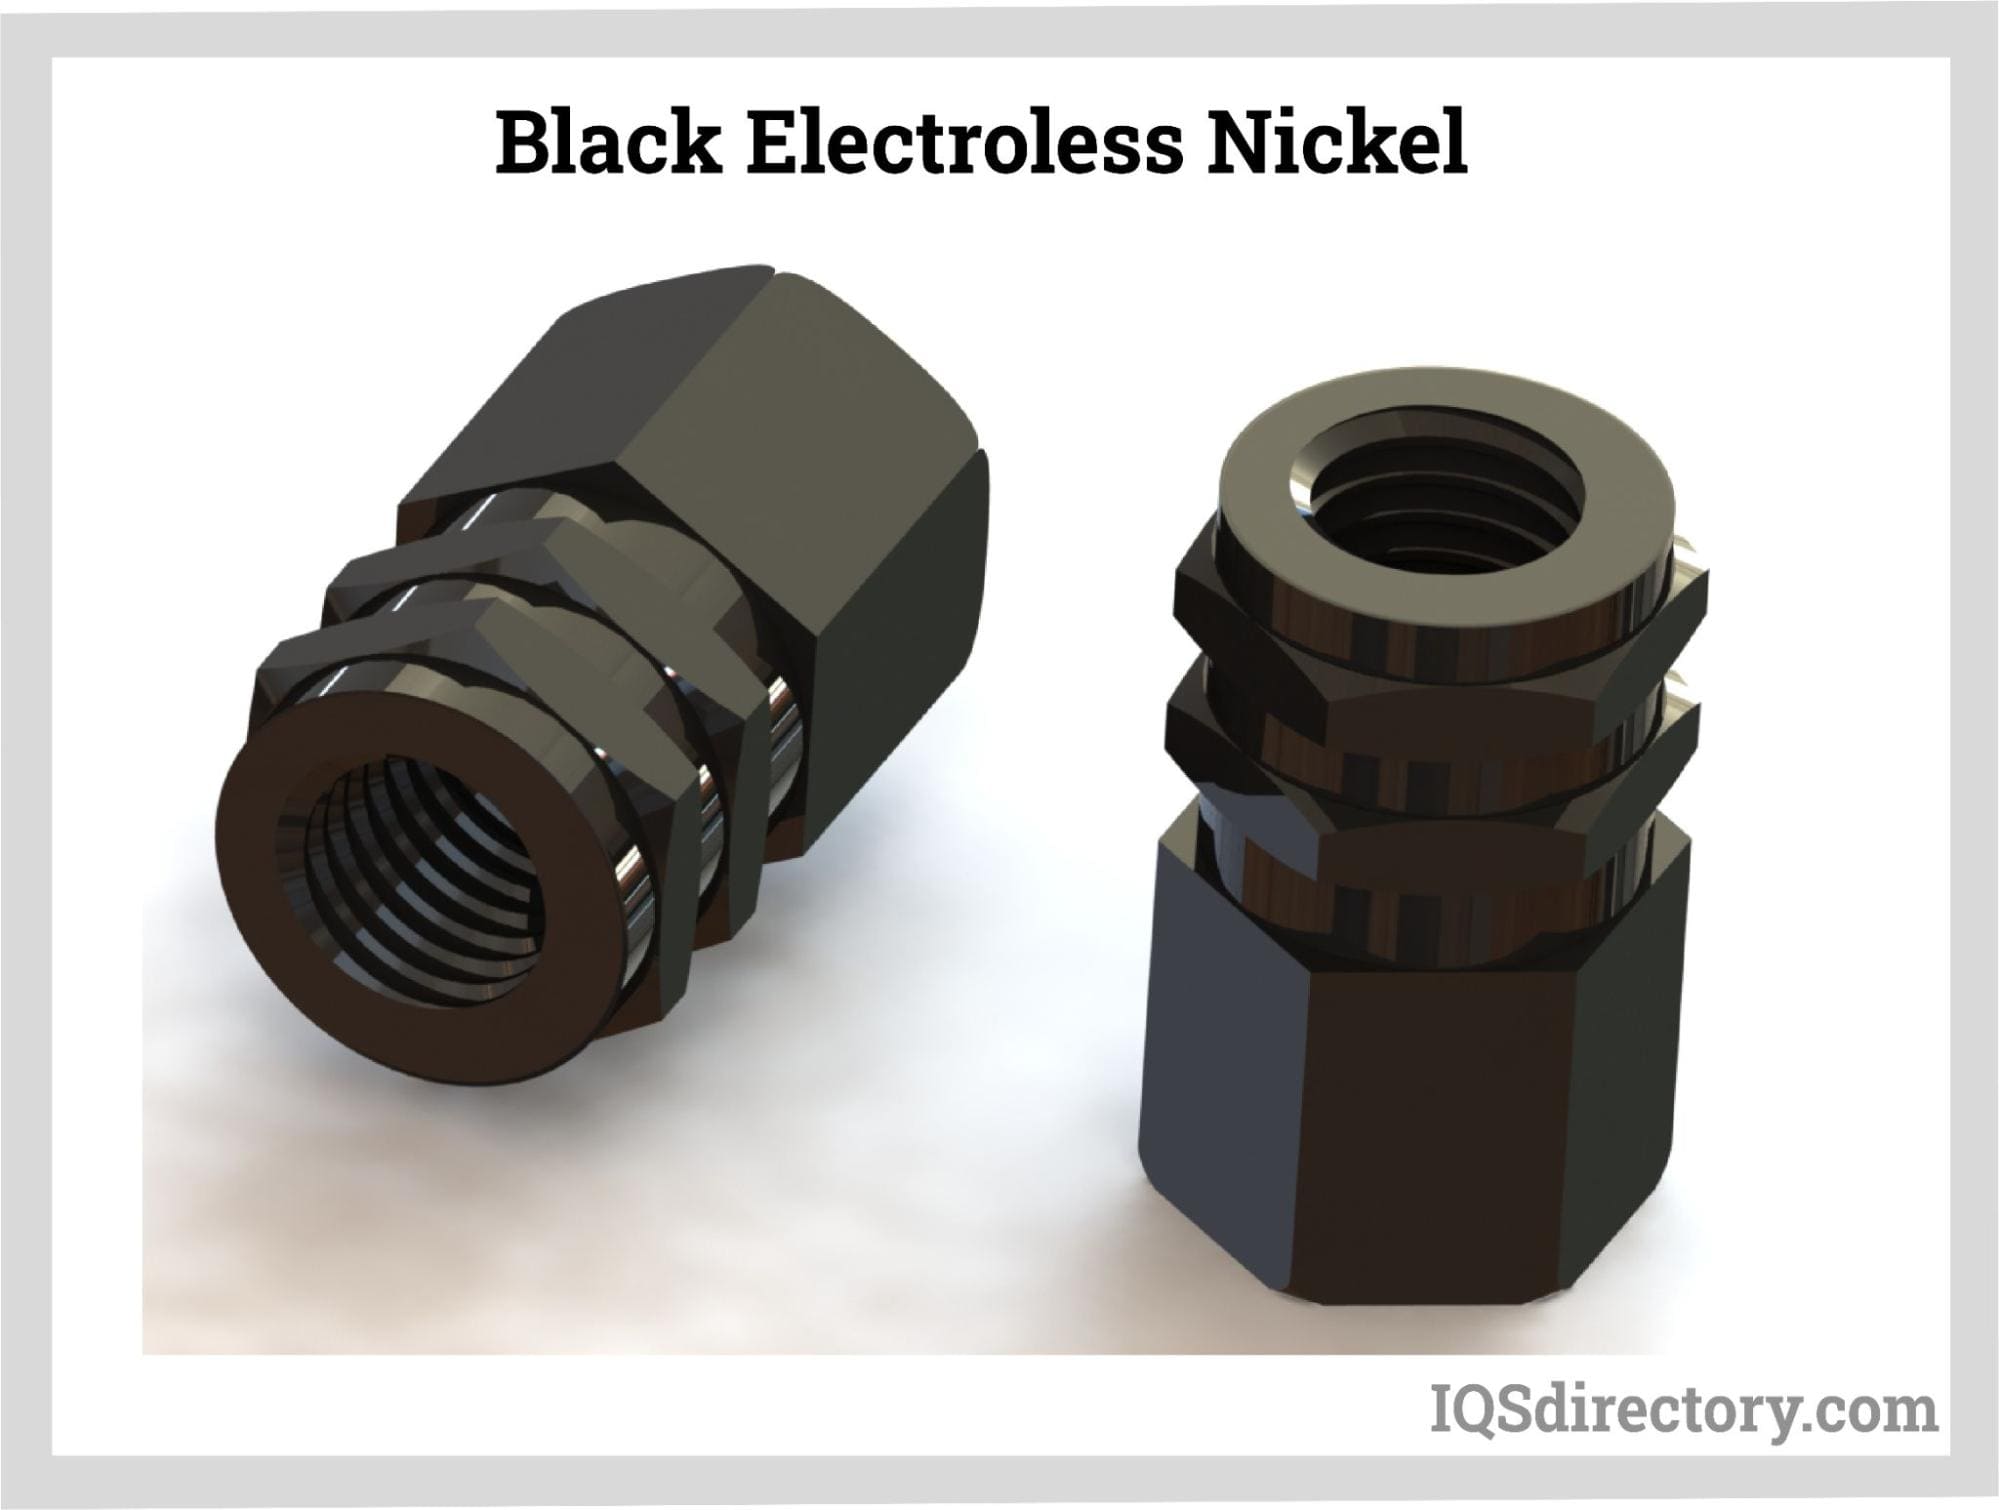 Black Electroless Nickel